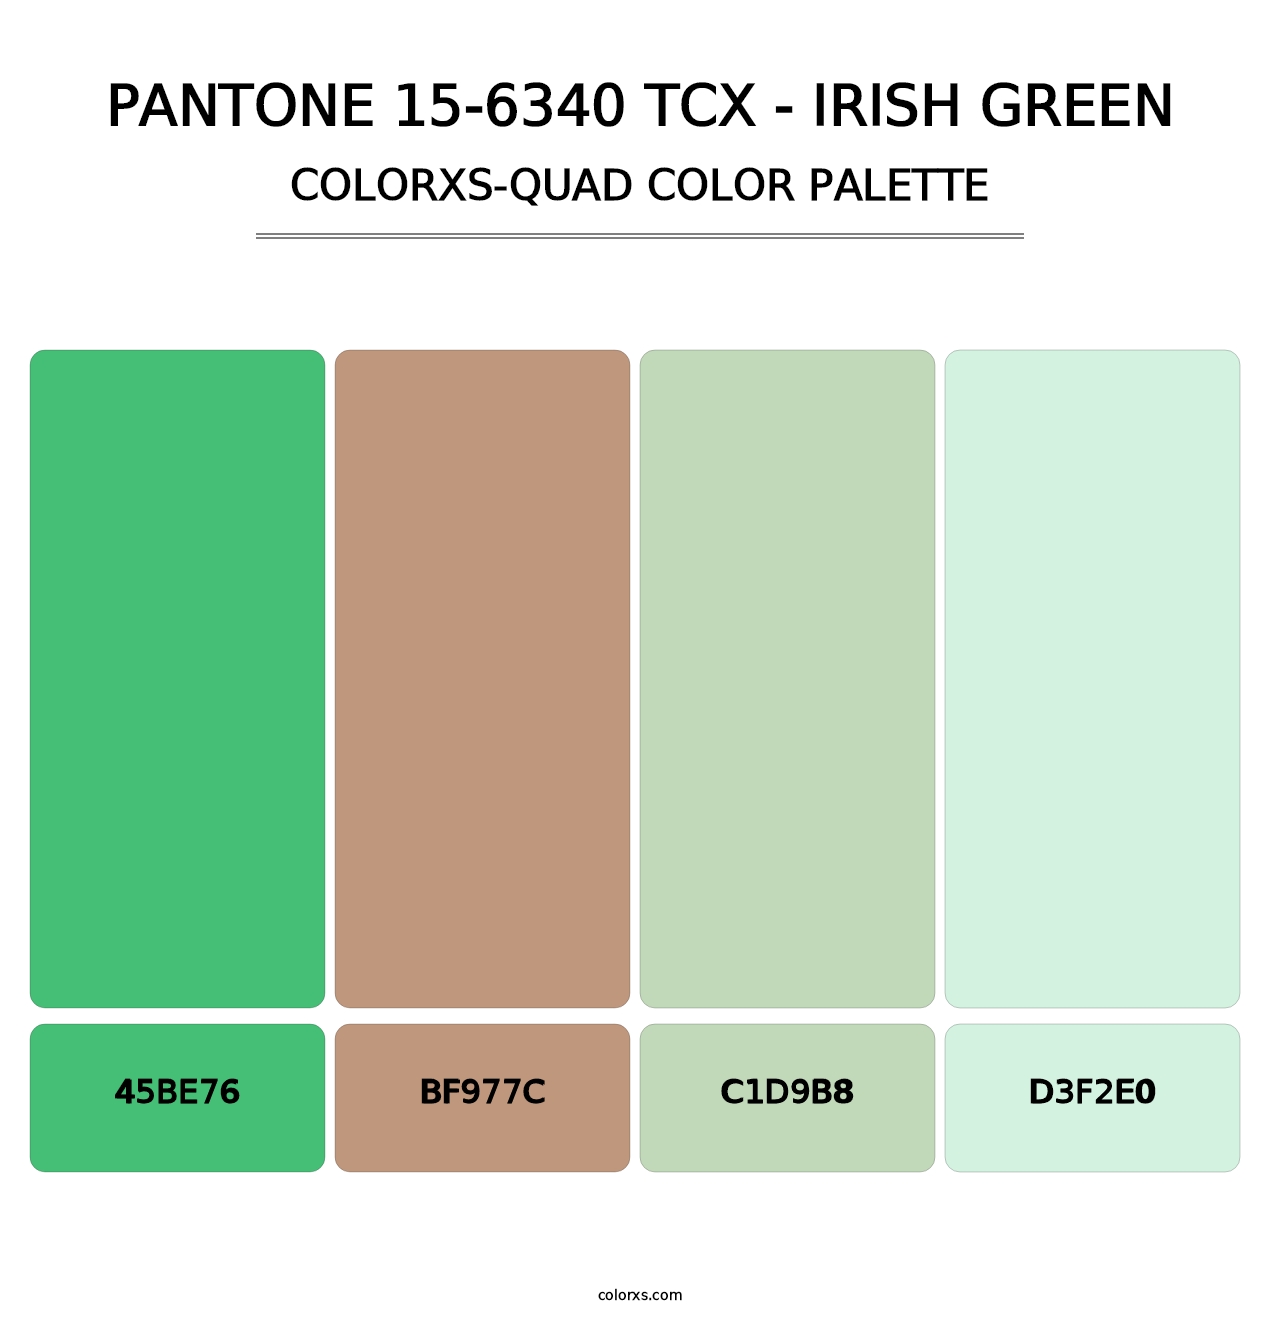 PANTONE 15-6340 TCX - Irish Green - Colorxs Quad Palette